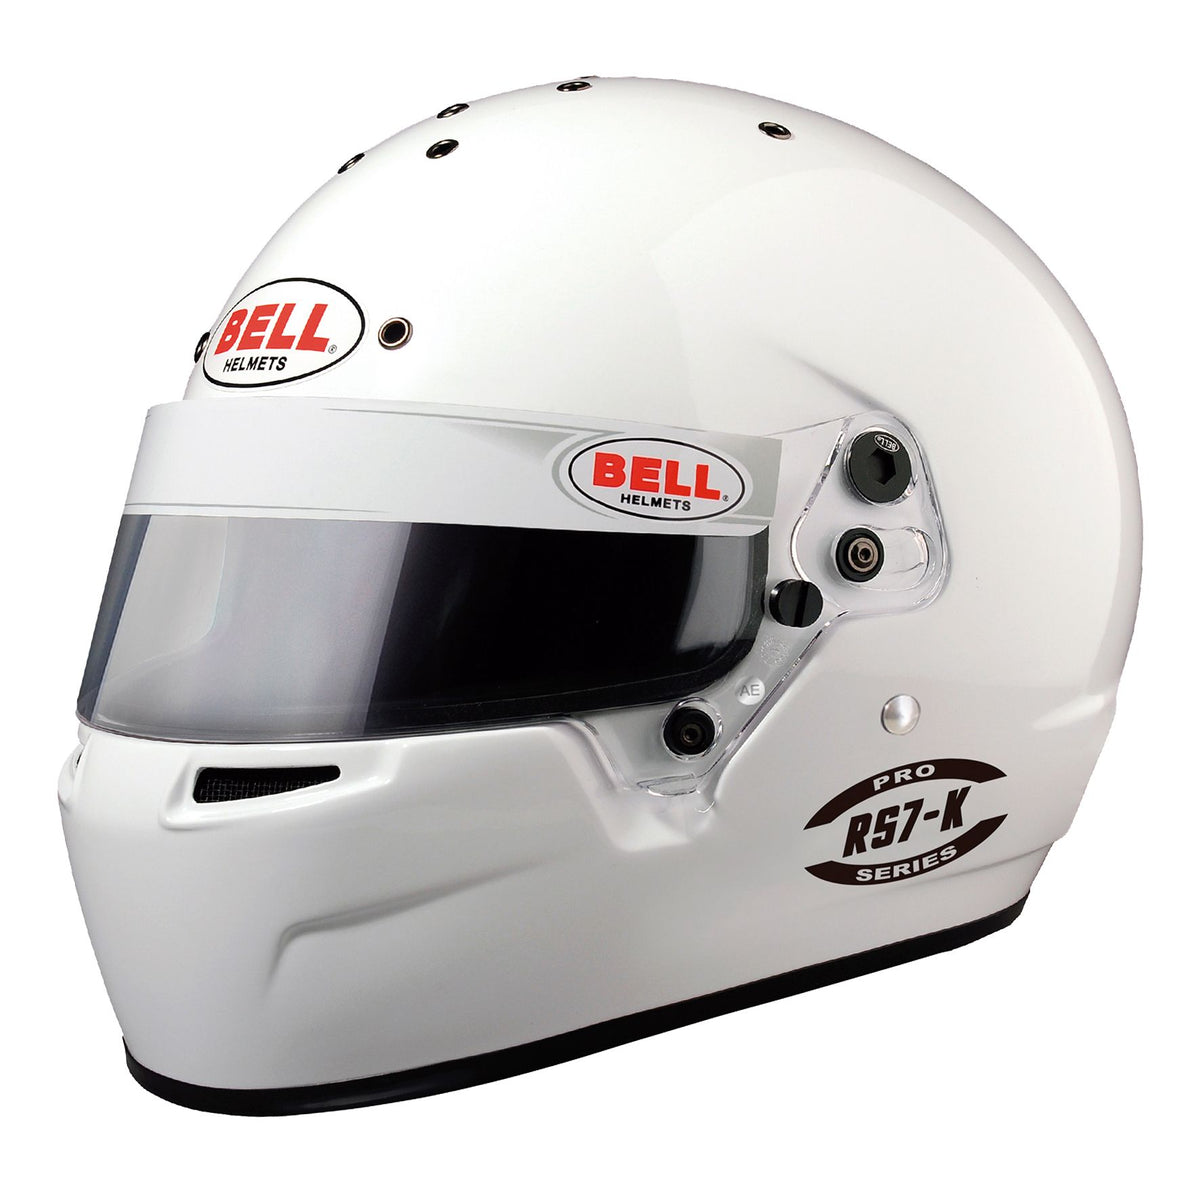 Bell RS7-K K2020 Kart Helmet +FREE Fleece Helmet Bag